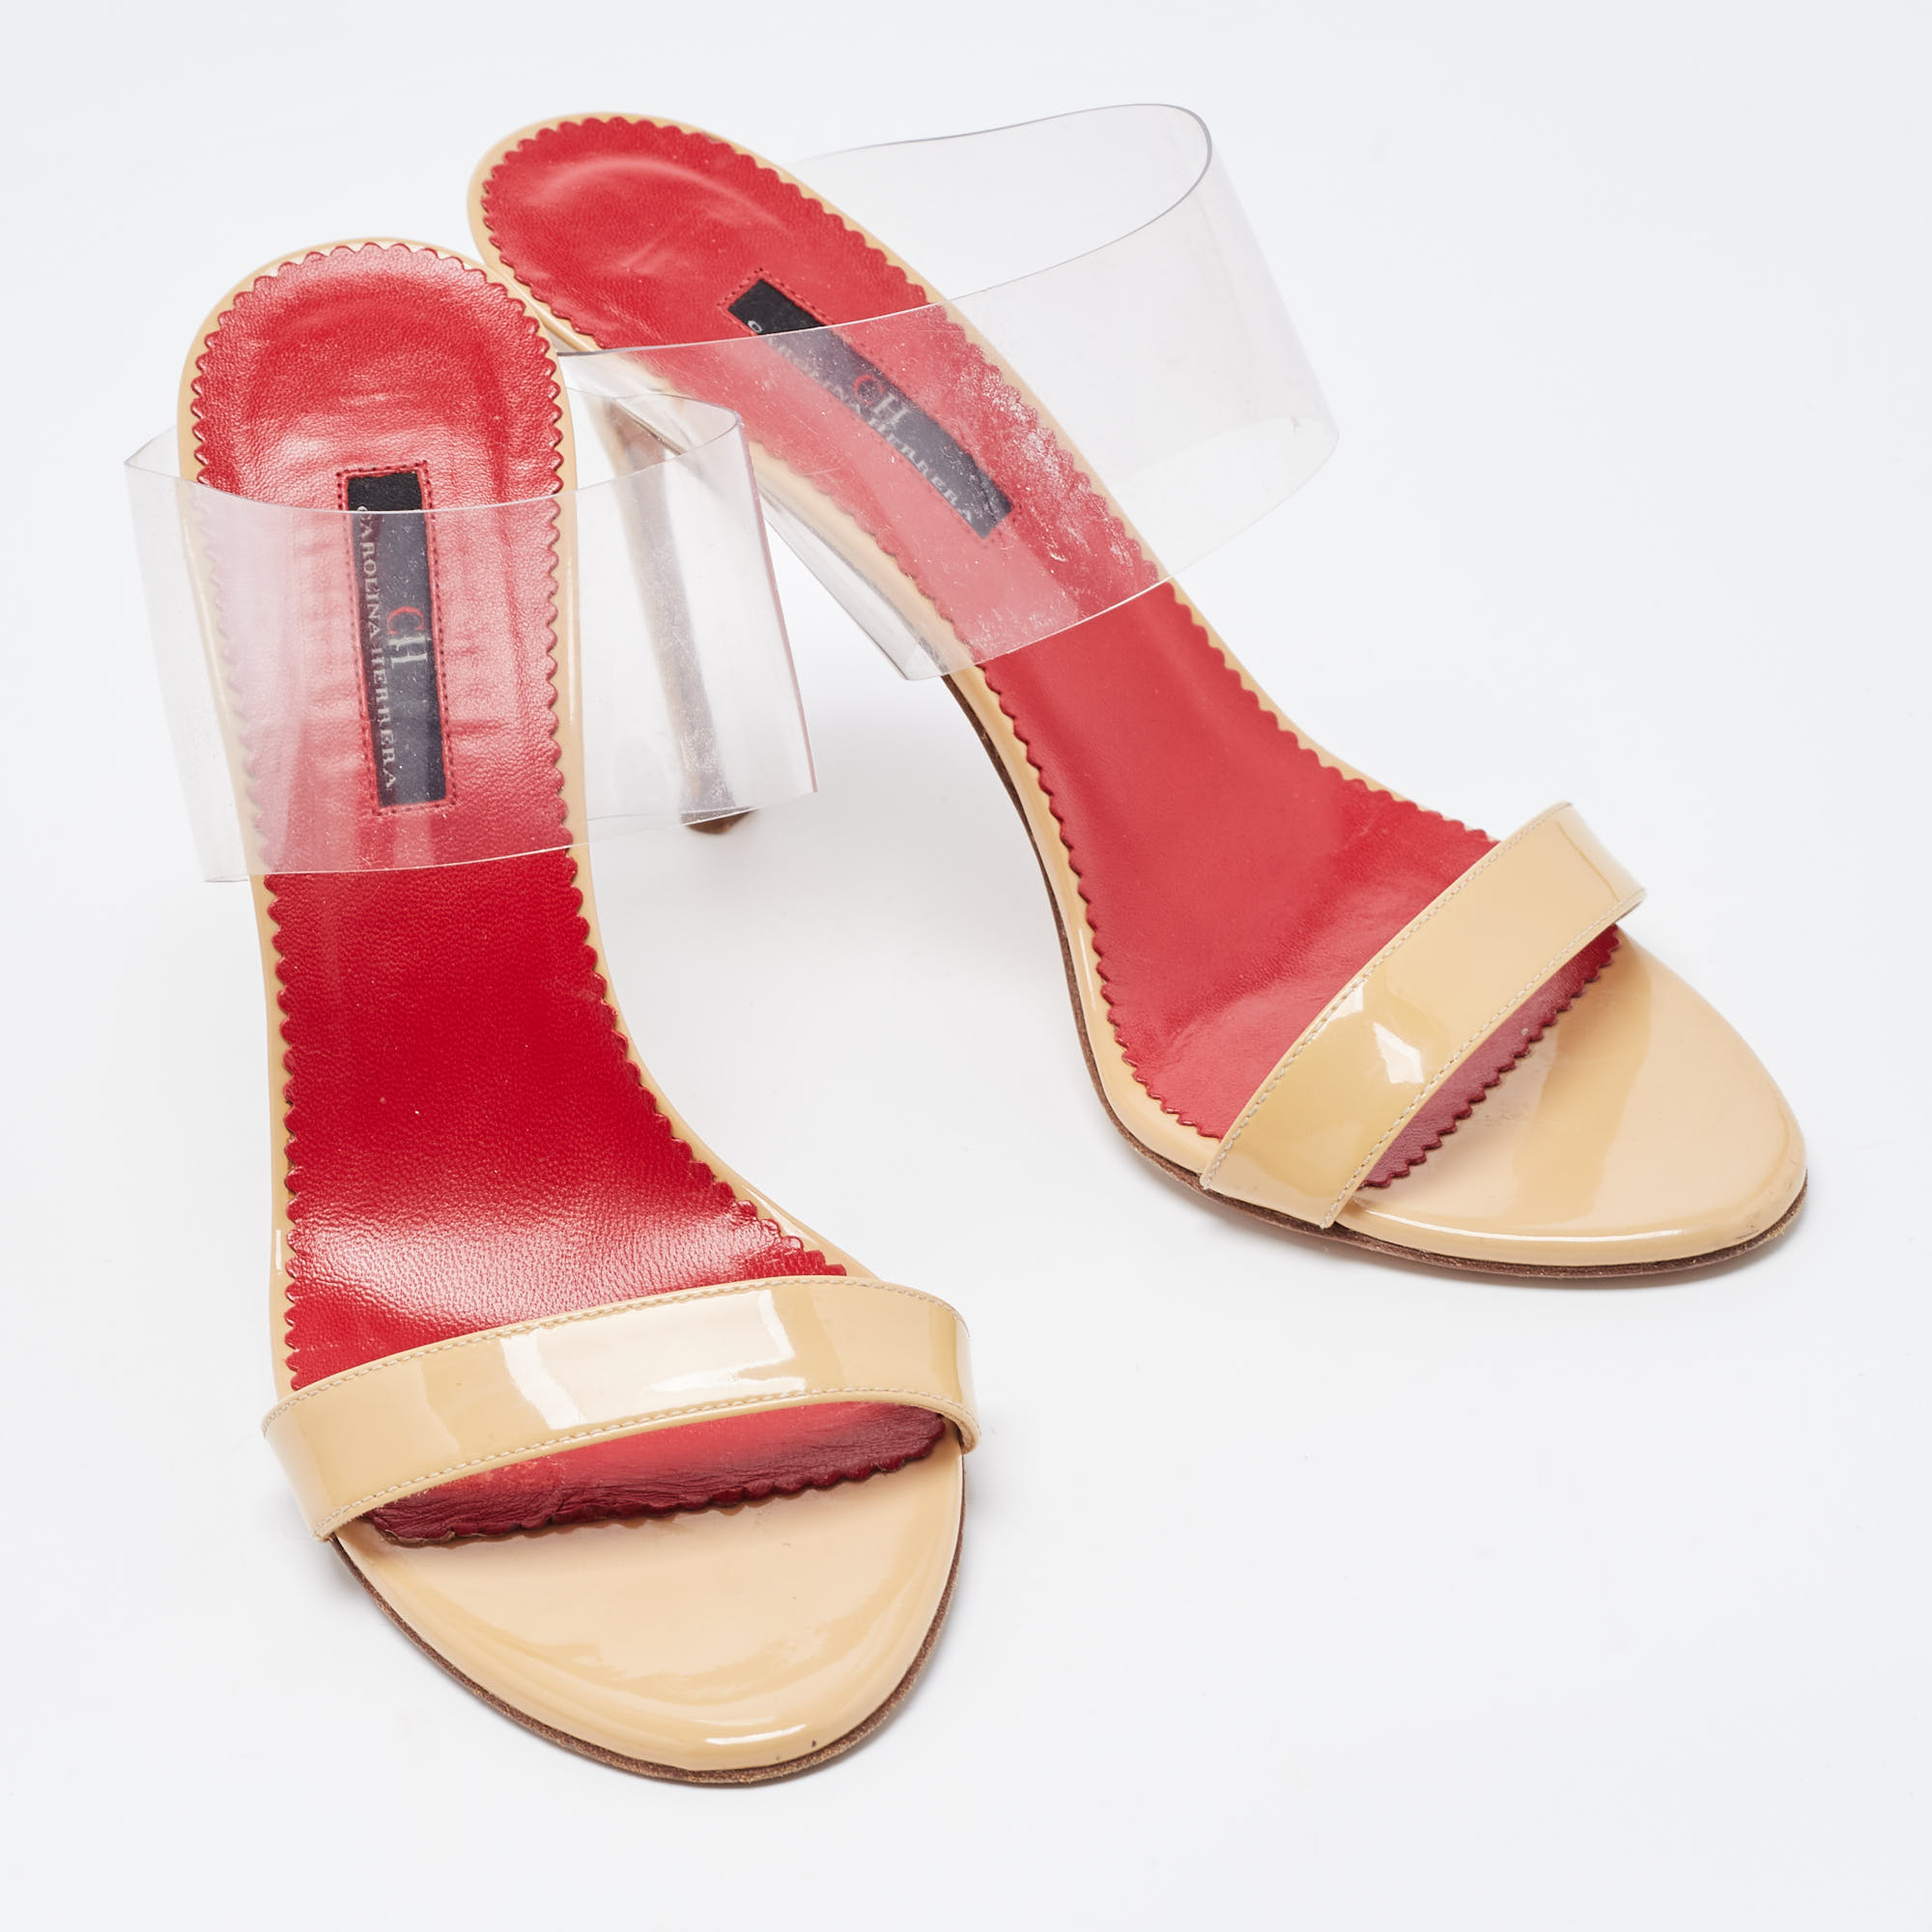 CH Carolina Herrera Beige Patent Leather And PVC Slide Sandals Size 38